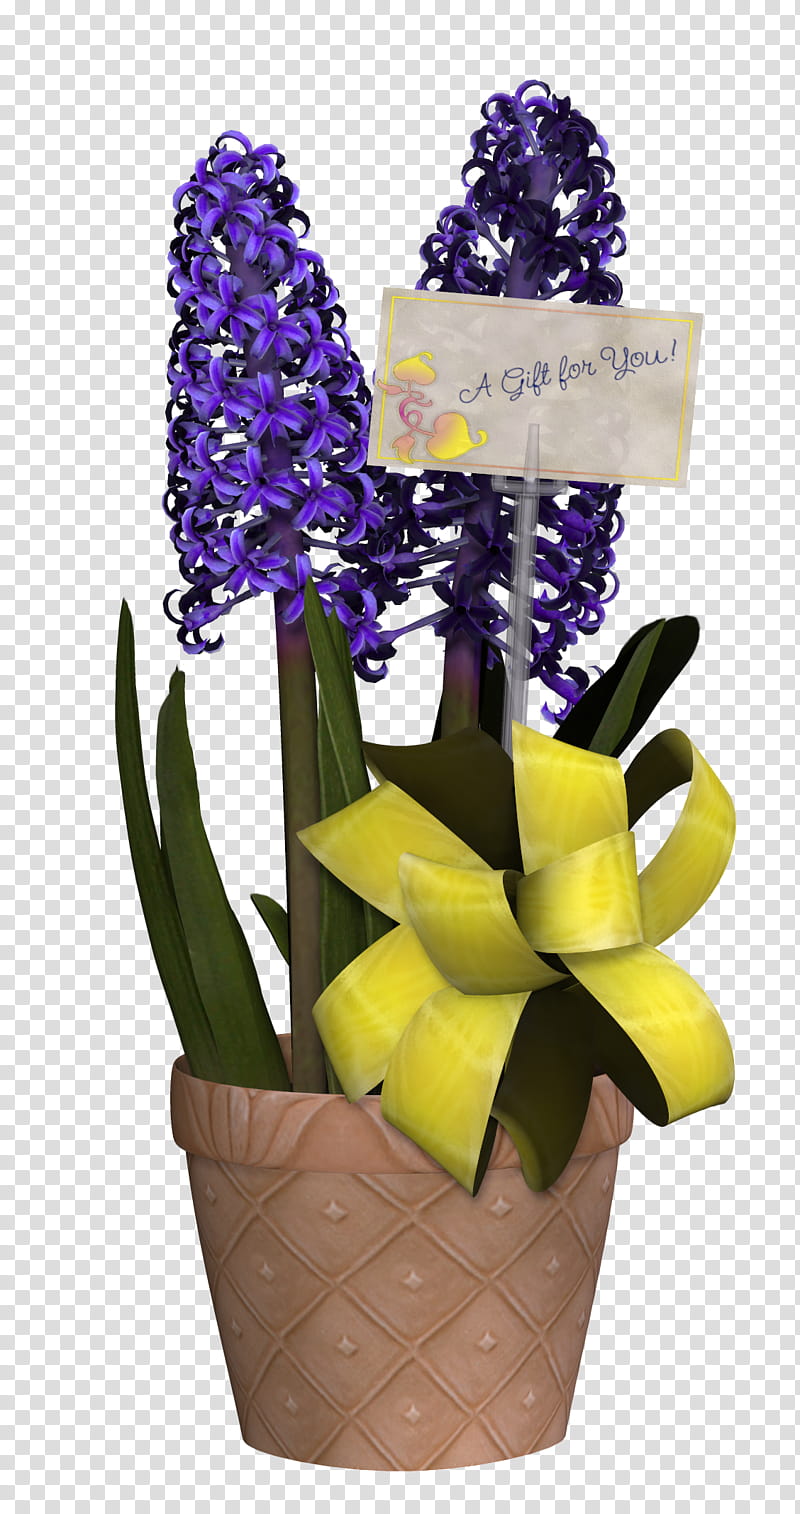 Hyacinth, purple petaled flowers transparent background PNG clipart